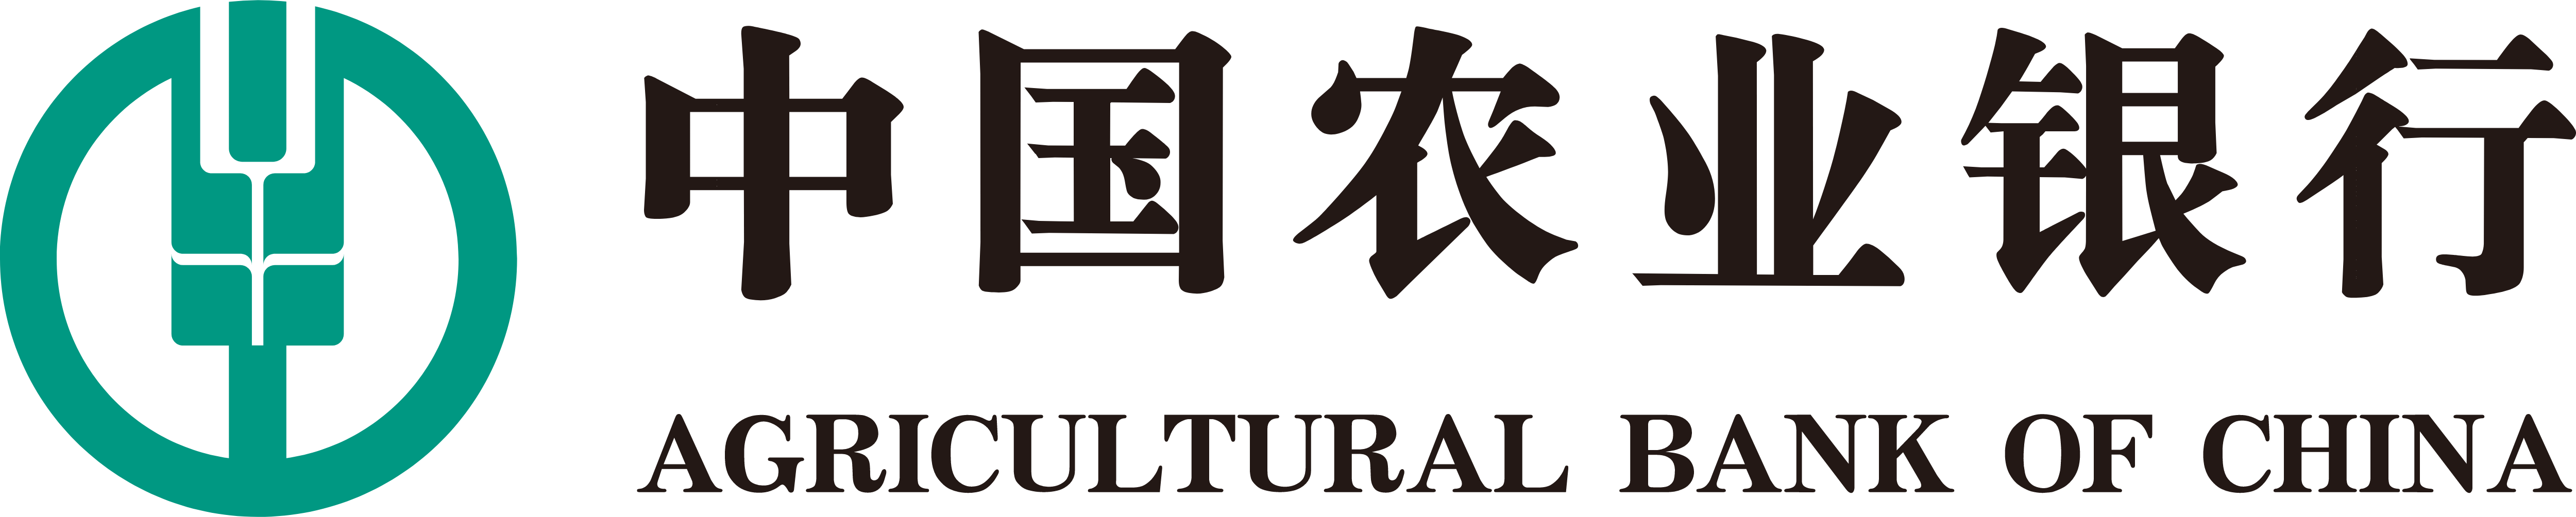 Agricultural Bank Of China Logos Download